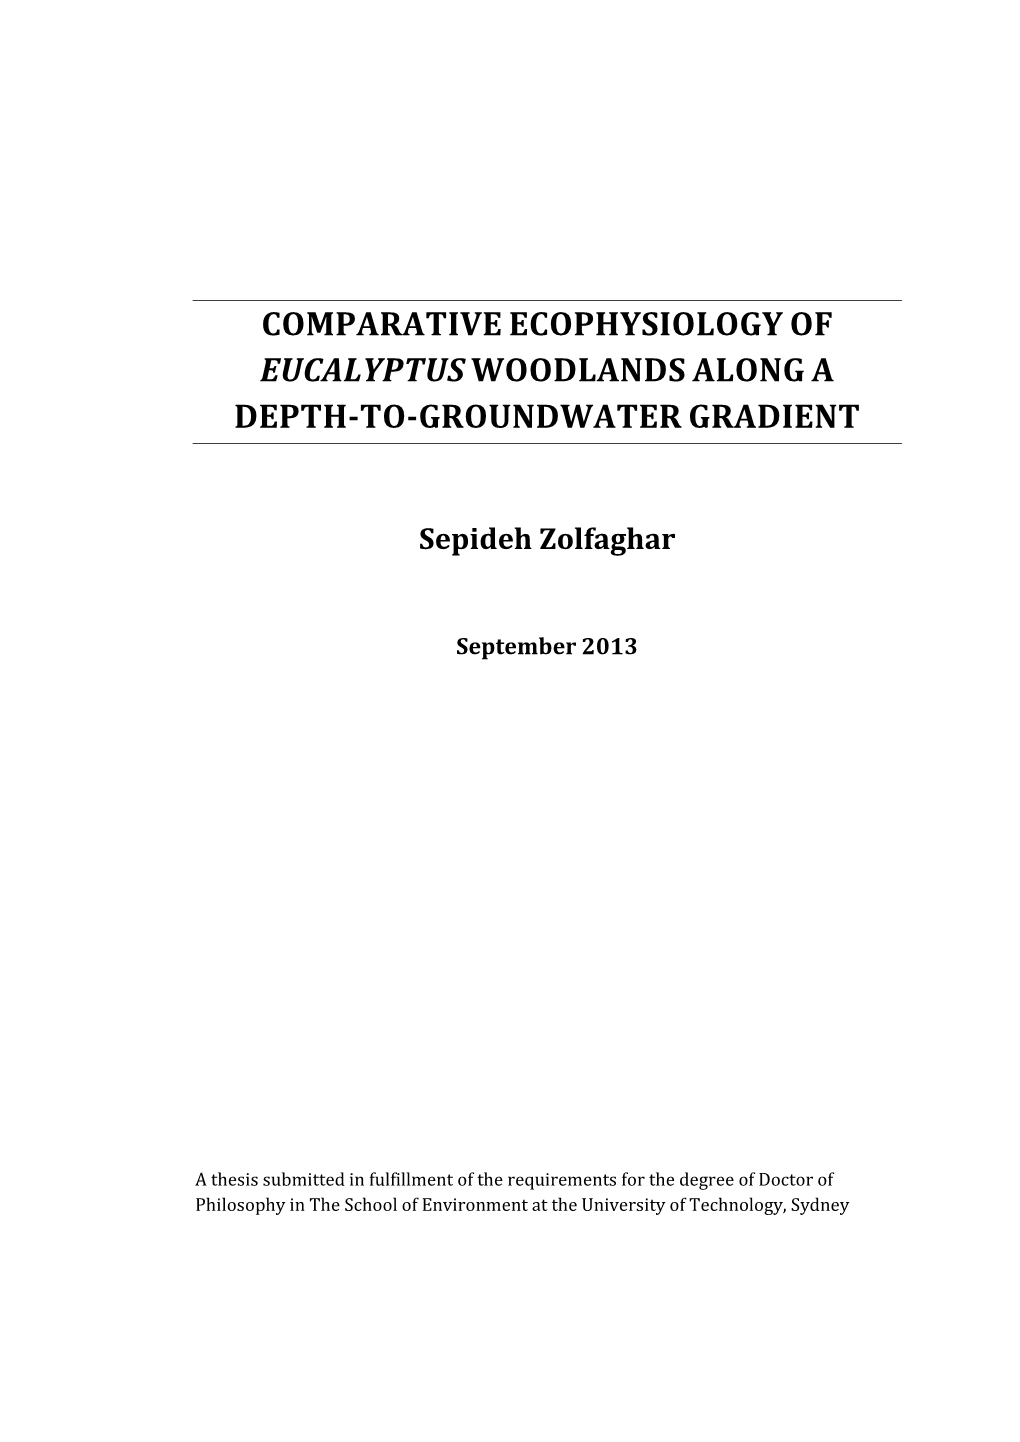 Comparative Ecophysiology of Eucalyptus Woodlands Along A